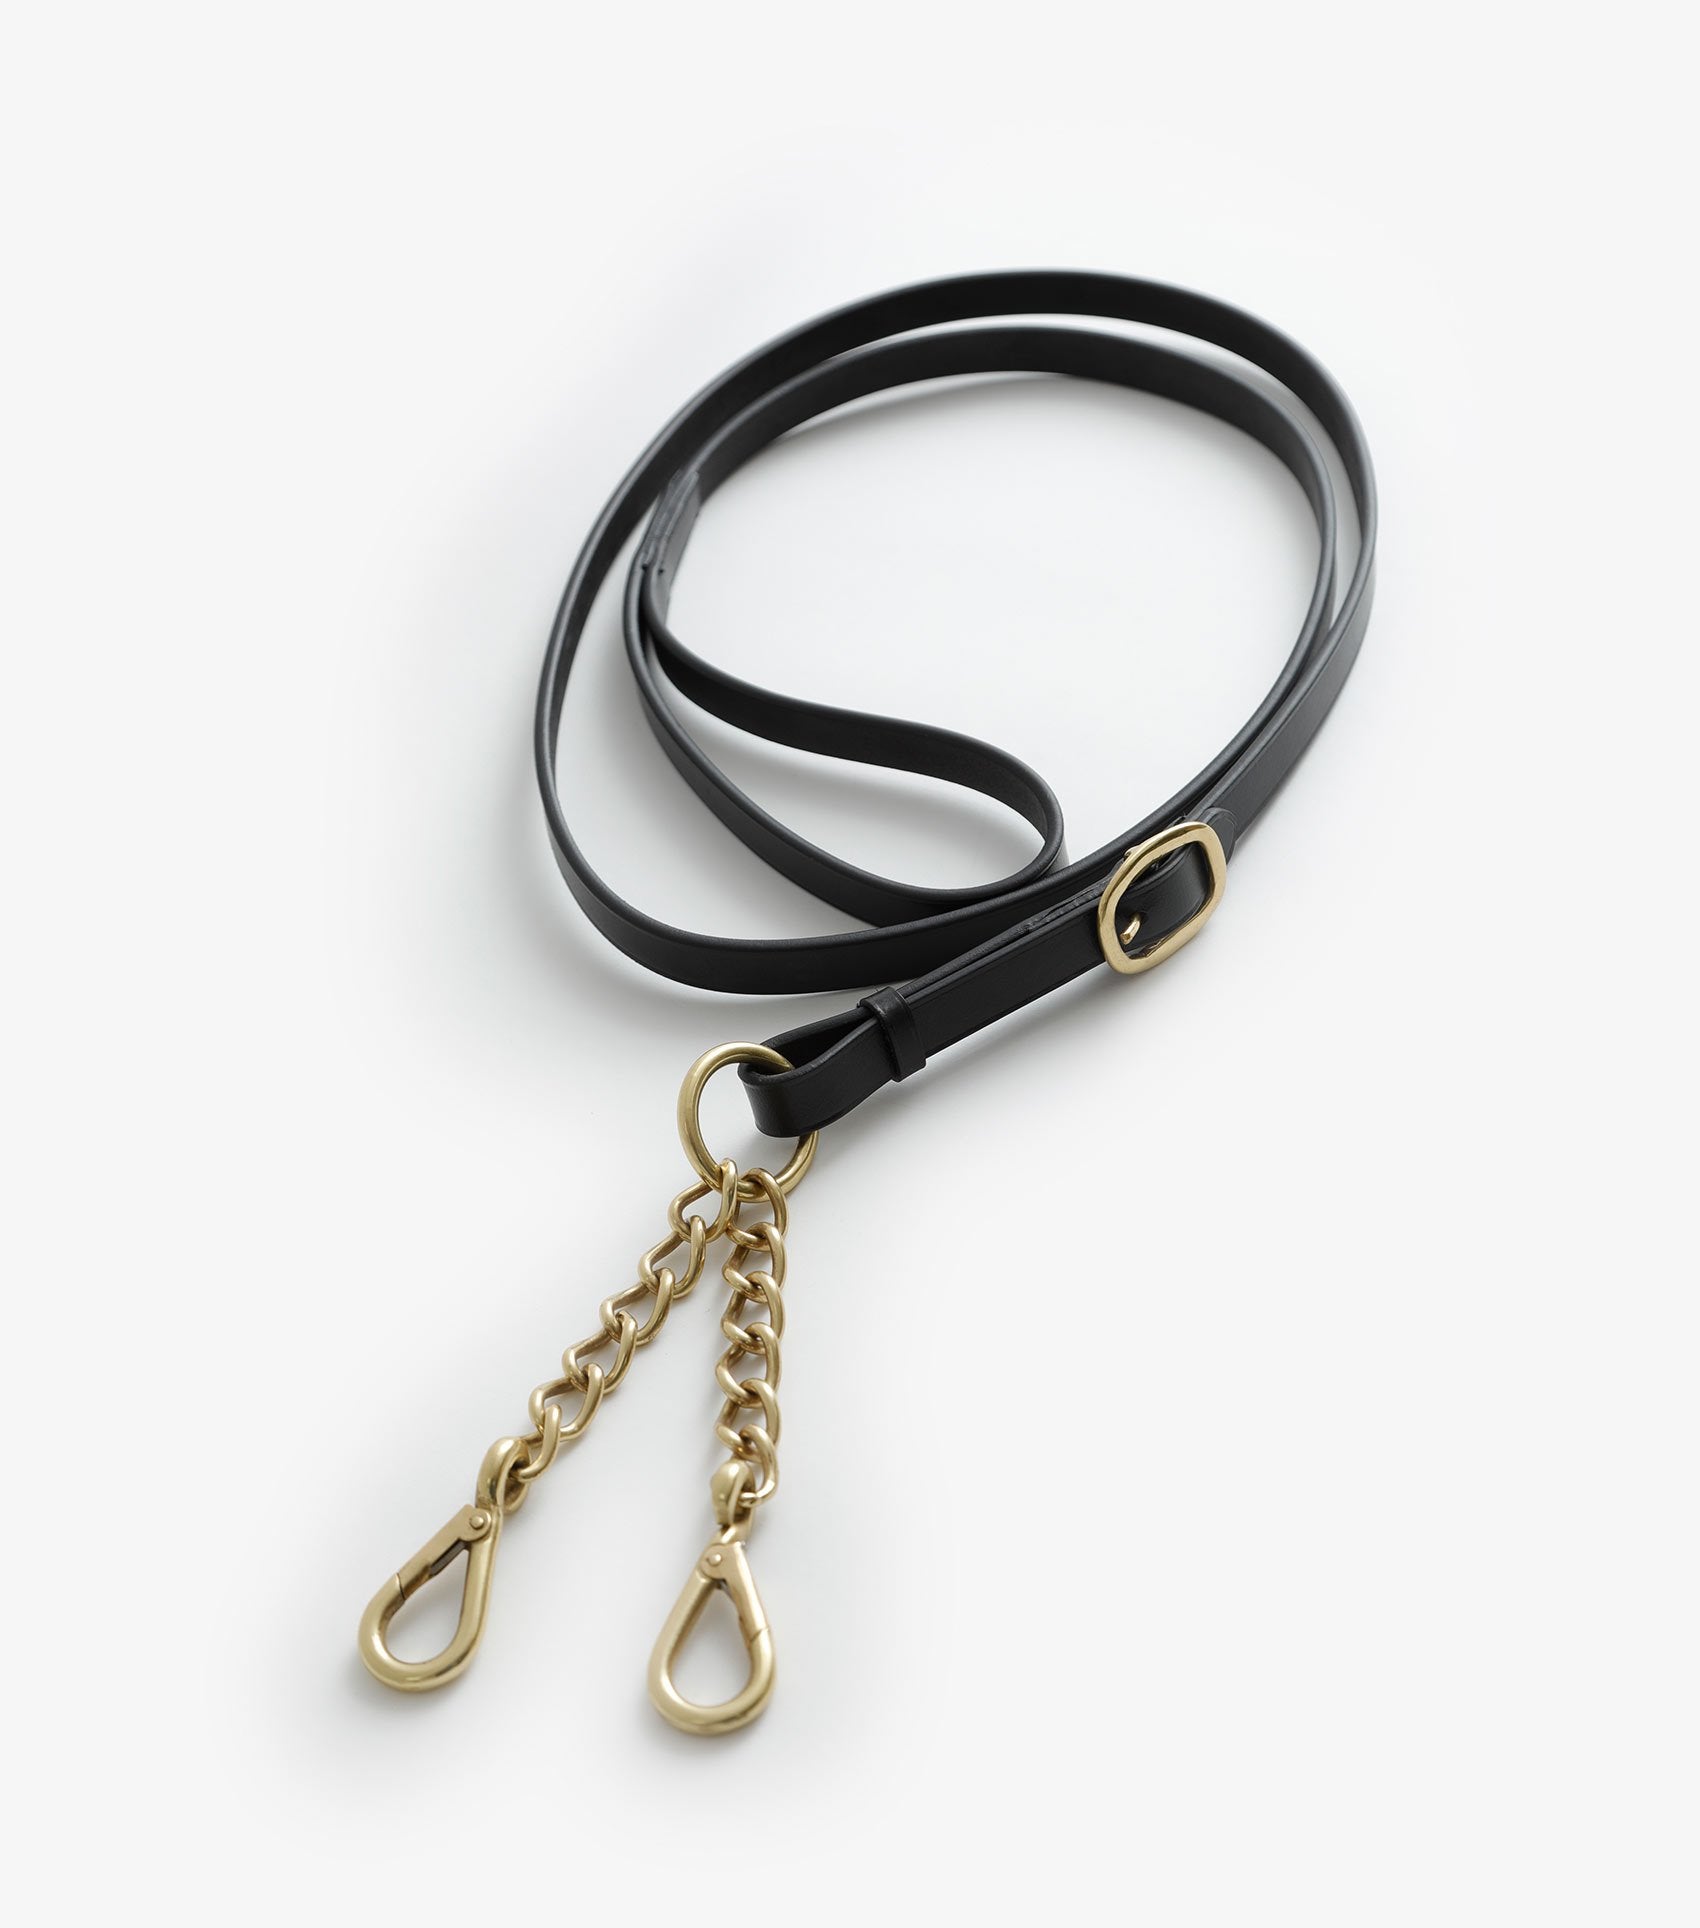 Description:Leather Lead Rein with Chain Coupling_Color:Black